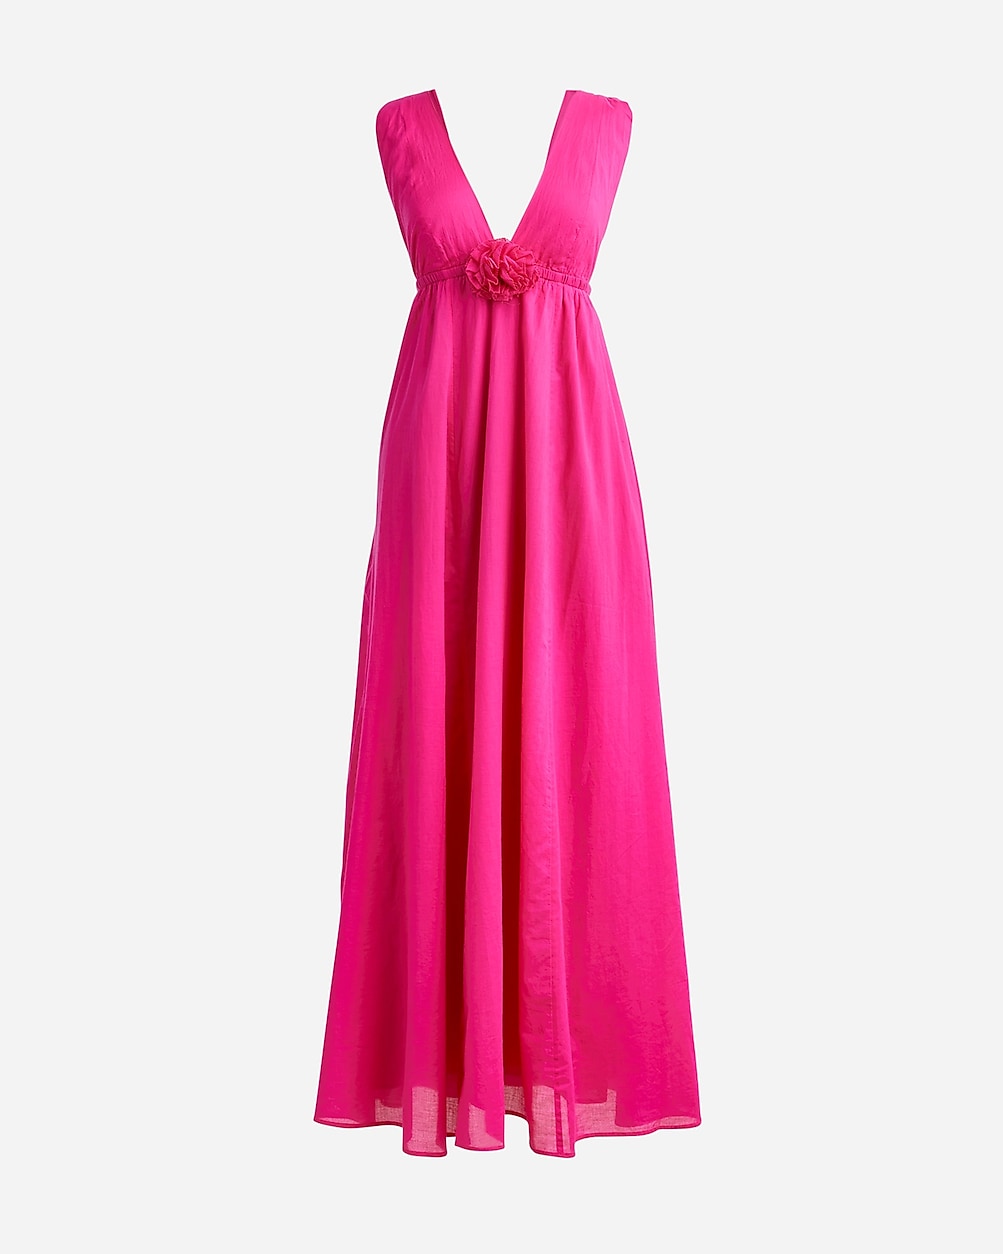 Rosette plunge dress in cotton voile